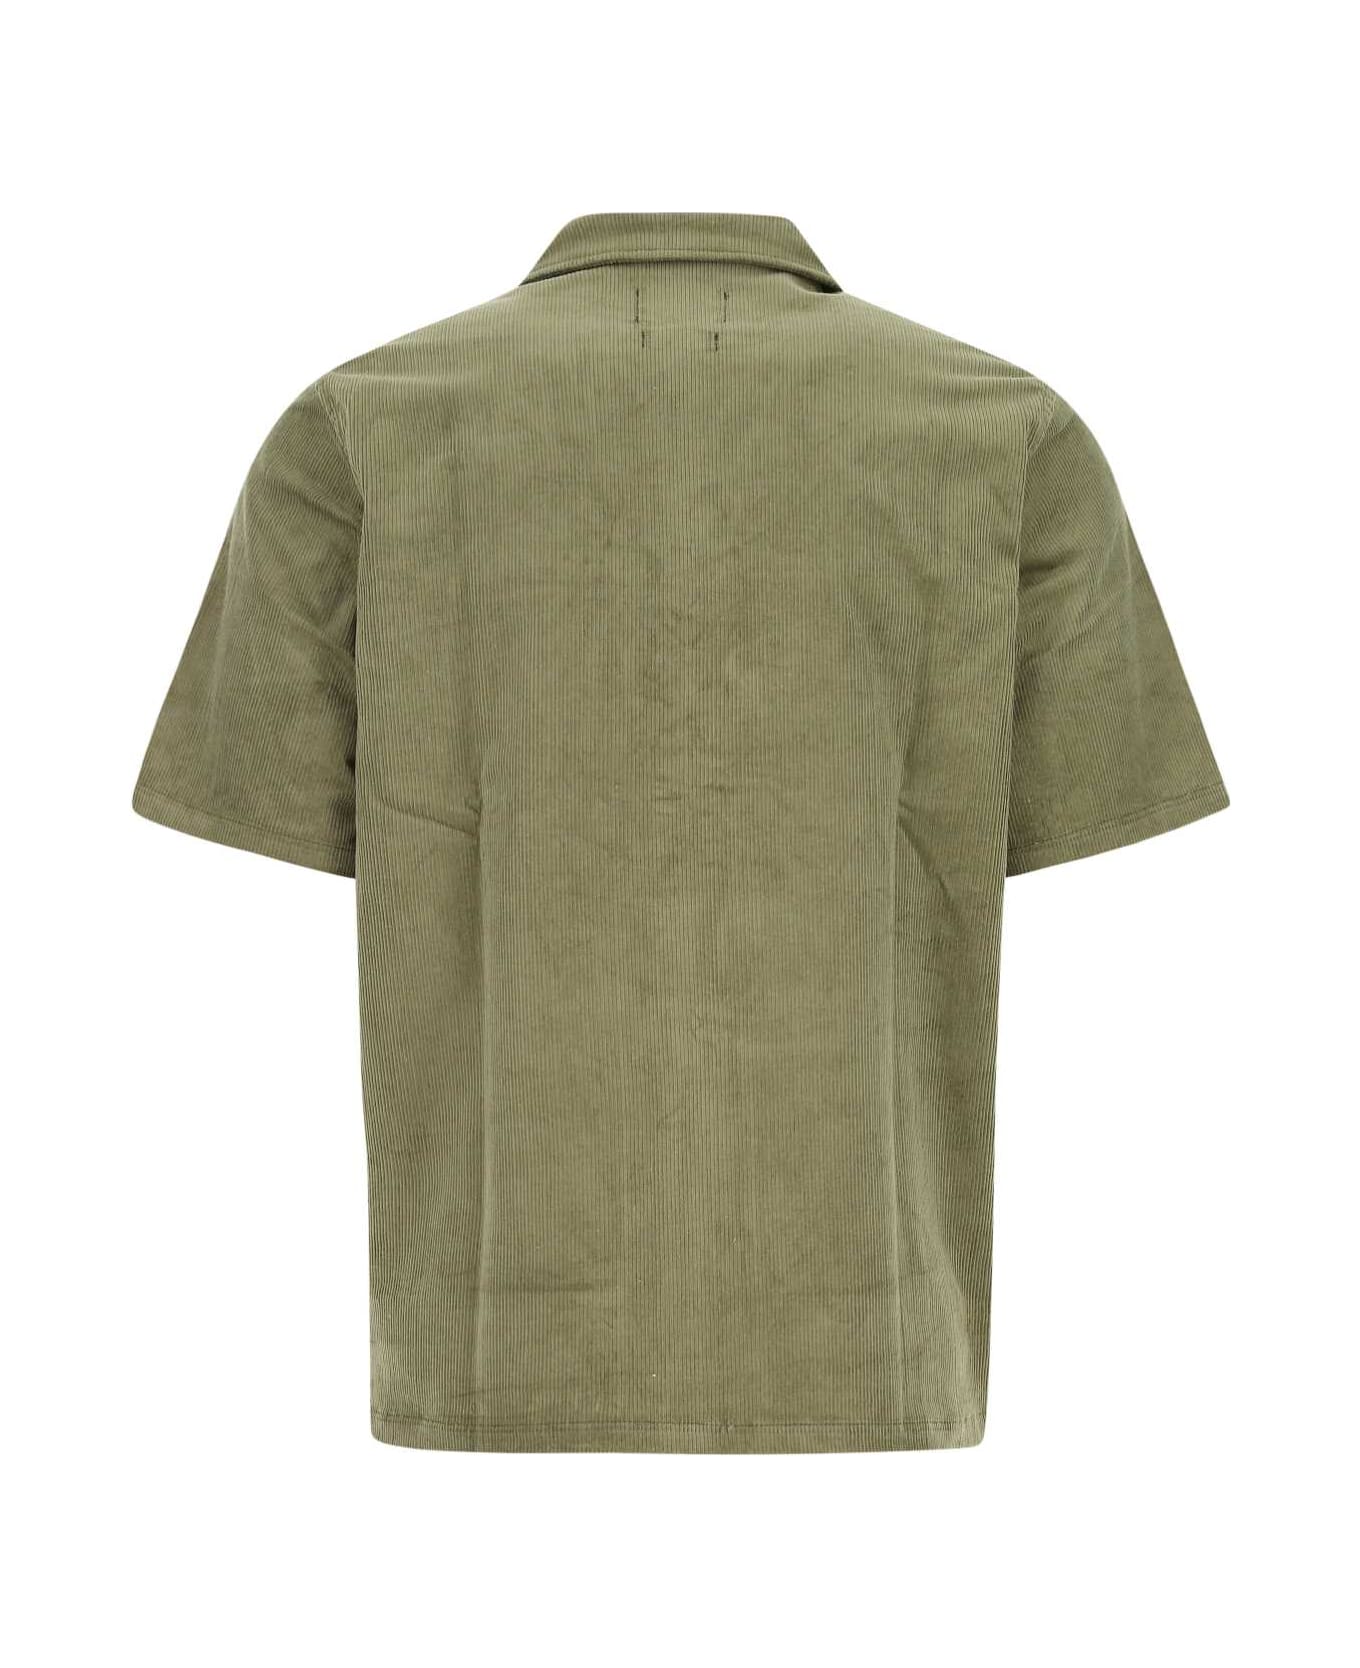 Howlin Olive Green Corduroy Shirt - GREEN シャツ